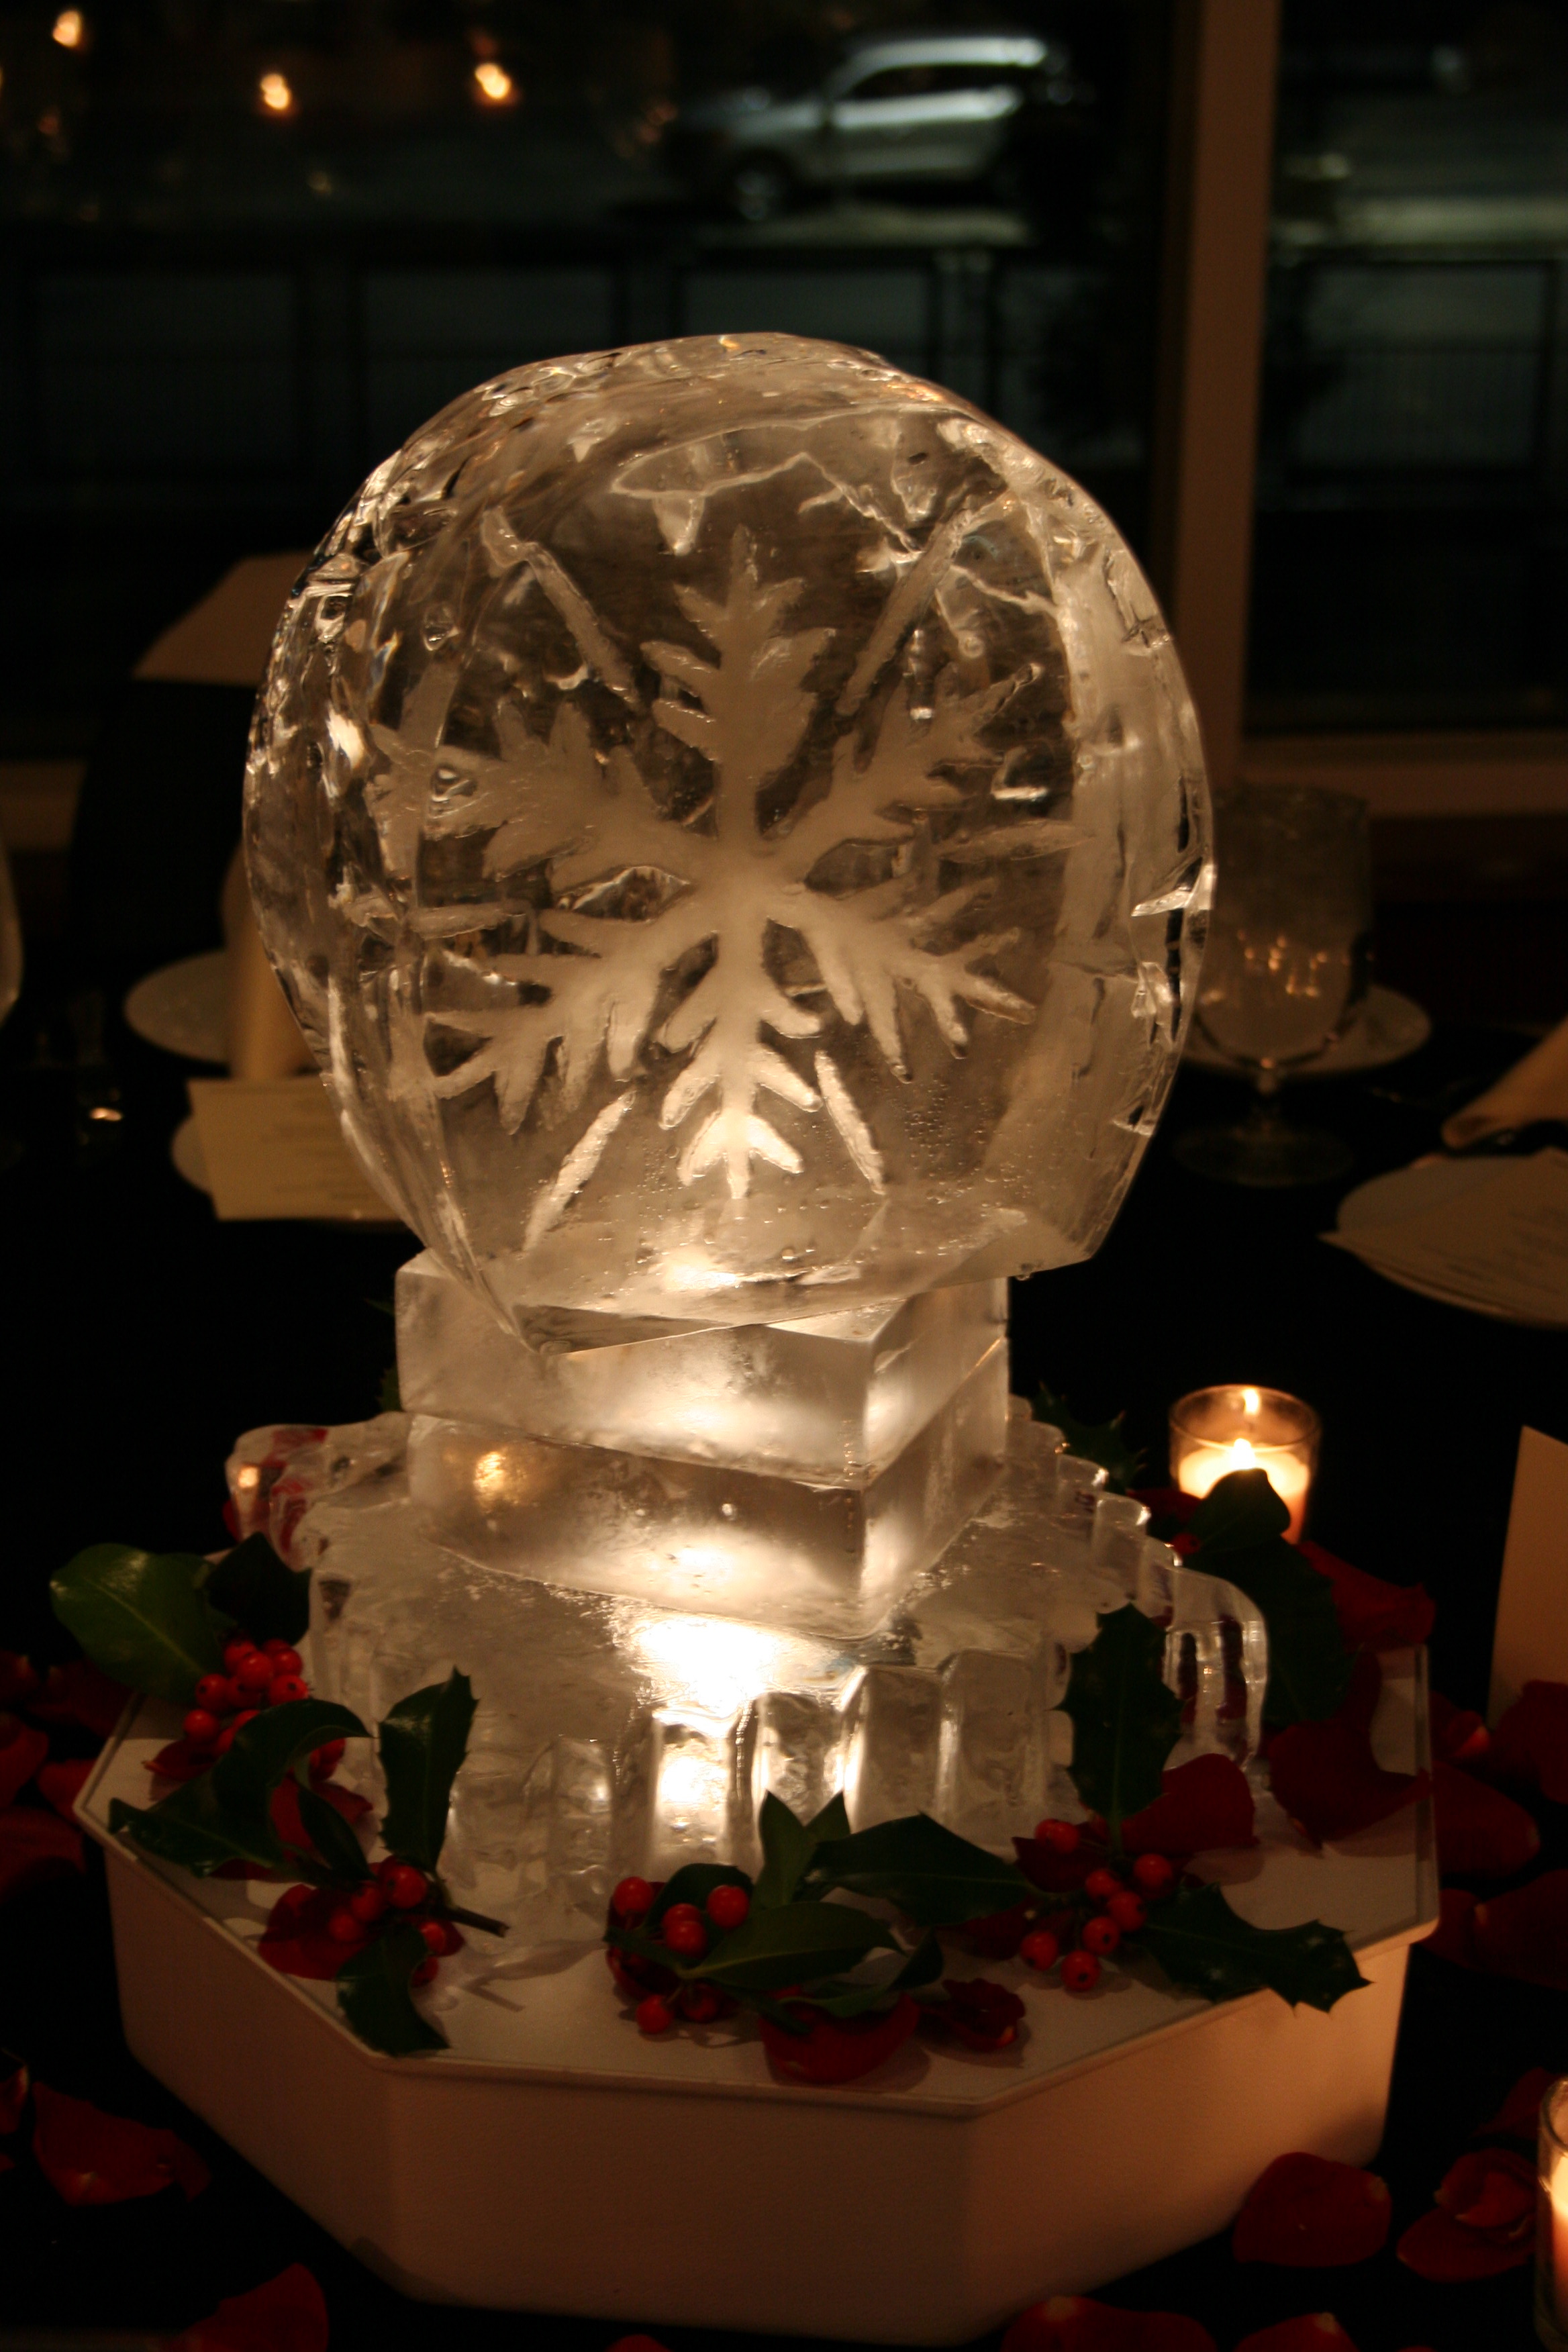 https://images.squarespace-cdn.com/content/v1/52153442e4b097b4002b0f1d/1418355142269-EUIMNCTOBKRI7WOWSNZT/Tabletop-Ice+Sculpture-+Snowflake+6+copy.JPG